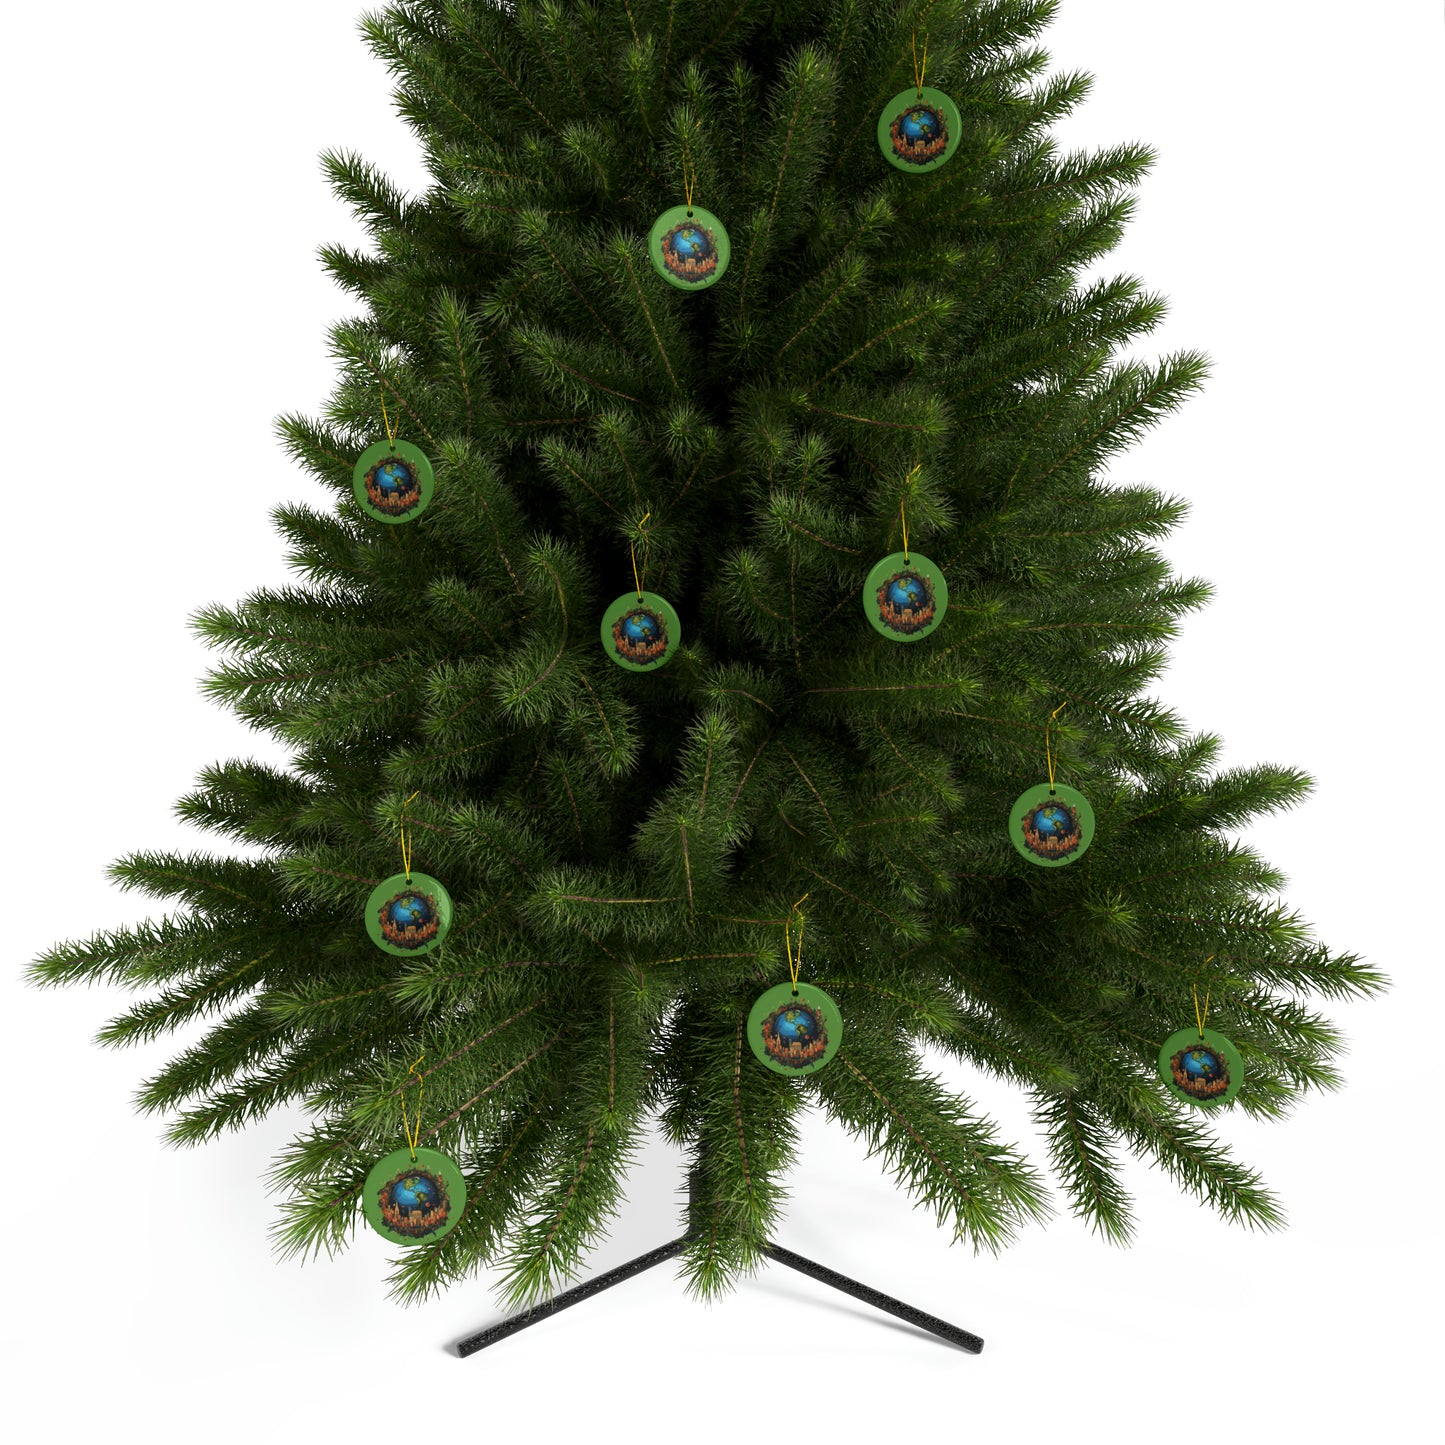 Earth in Christmas decorations and a big Christmas tree, green Ceramic Ornaments (1pc, 3pcs, 5pcs, 10pcs)